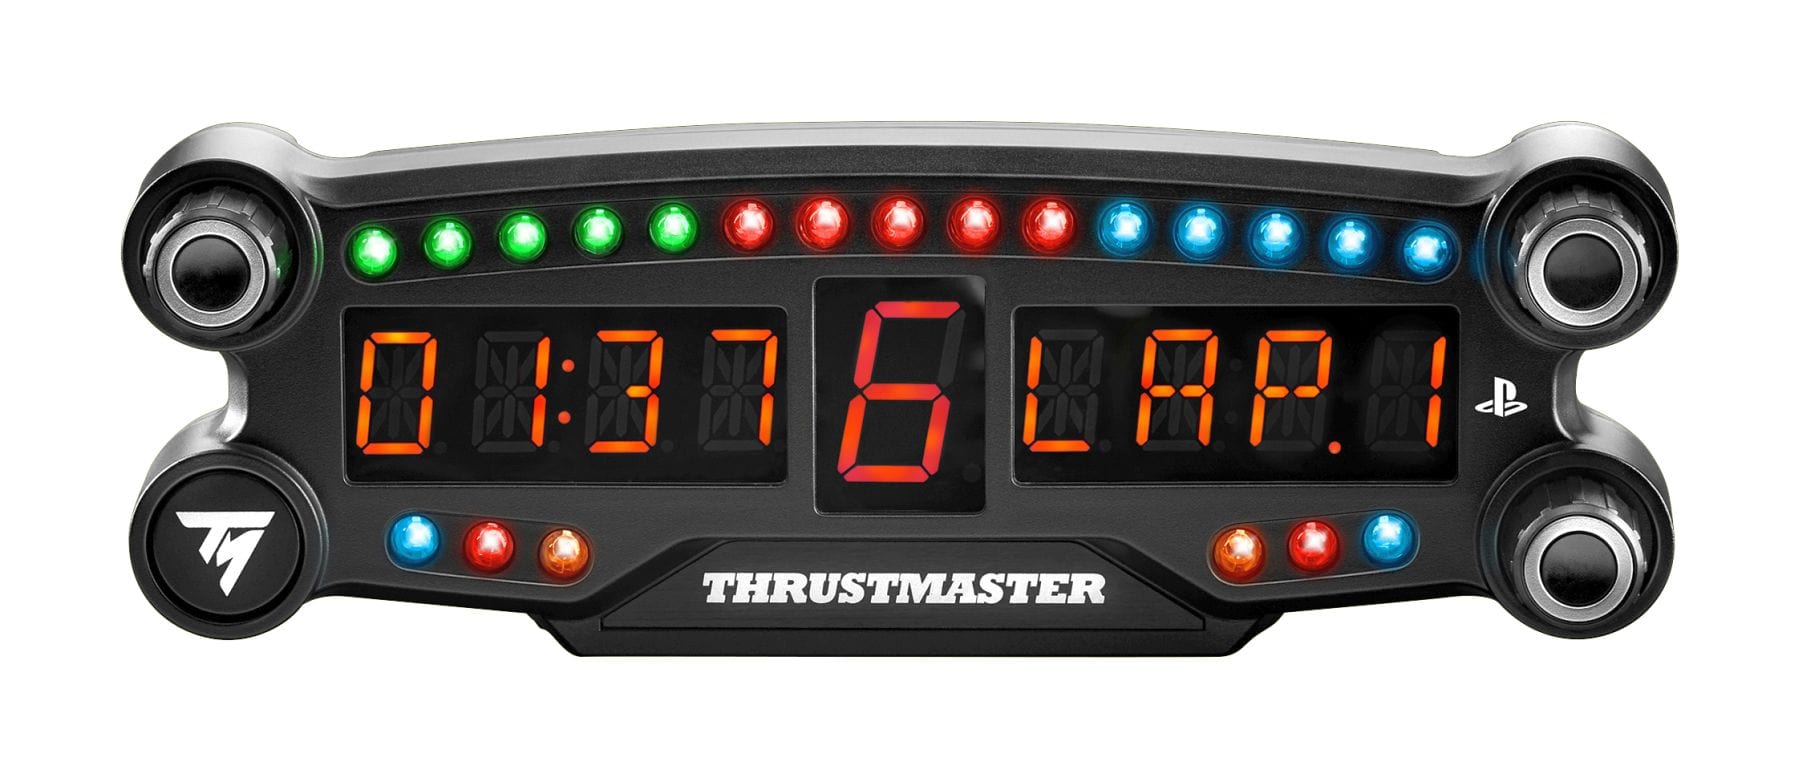 Thrustmaster - BT LED Display [Add-On]